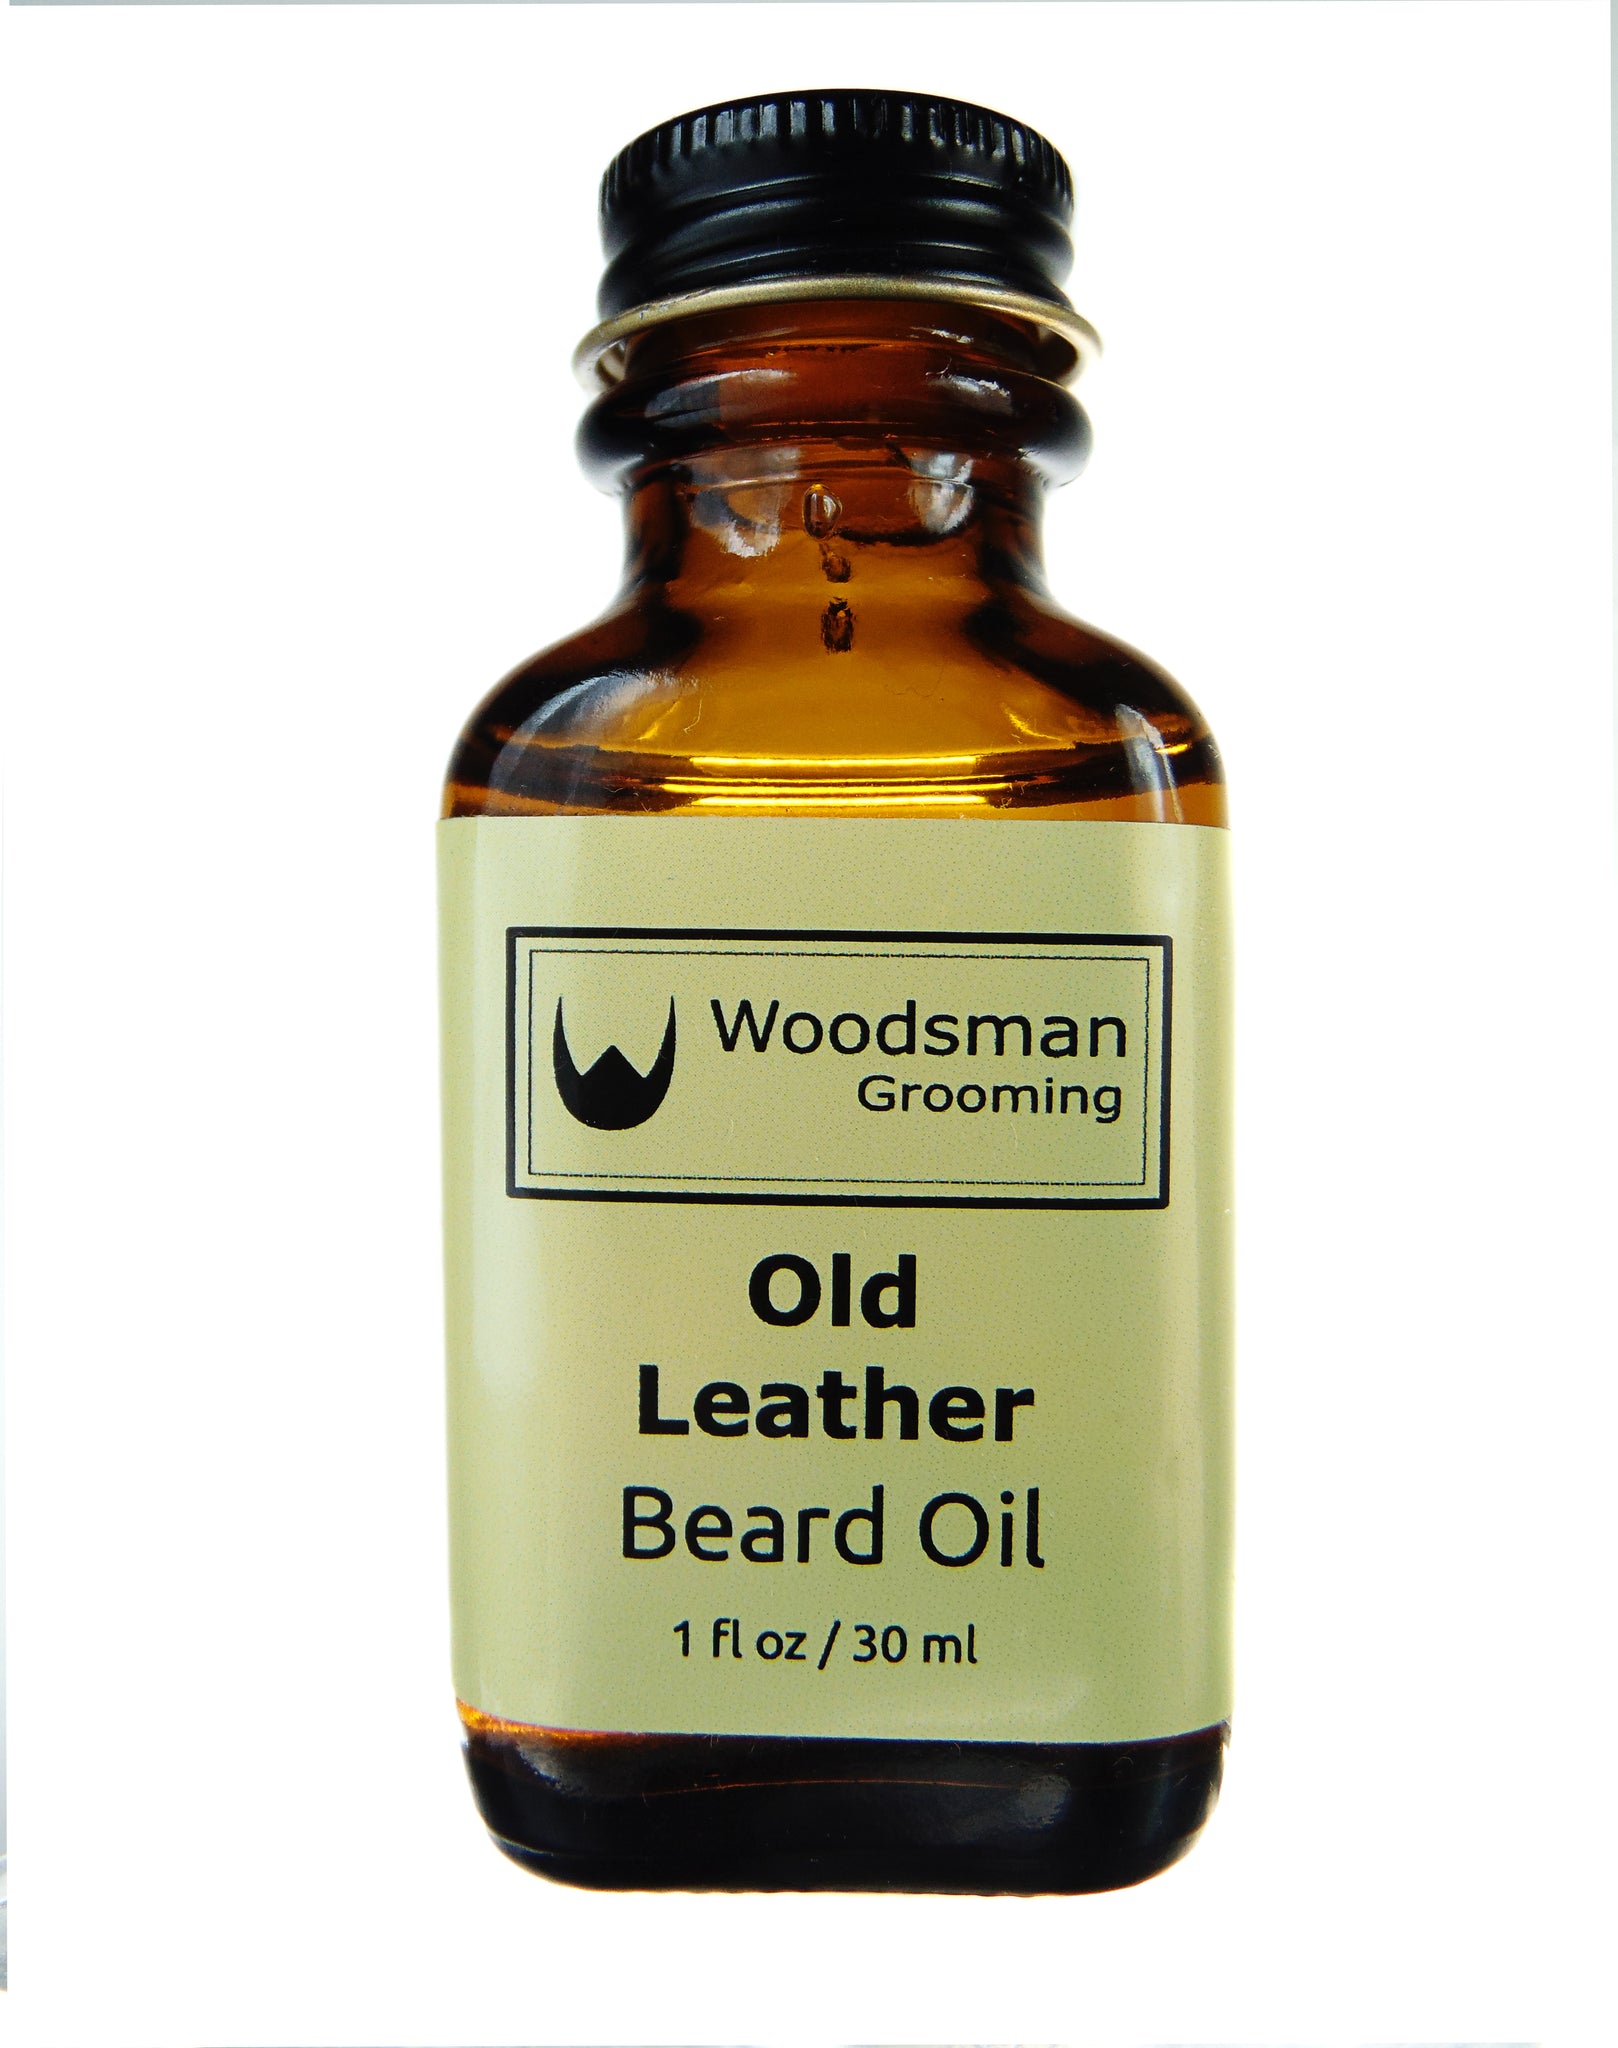 Old Leather Beard Oil